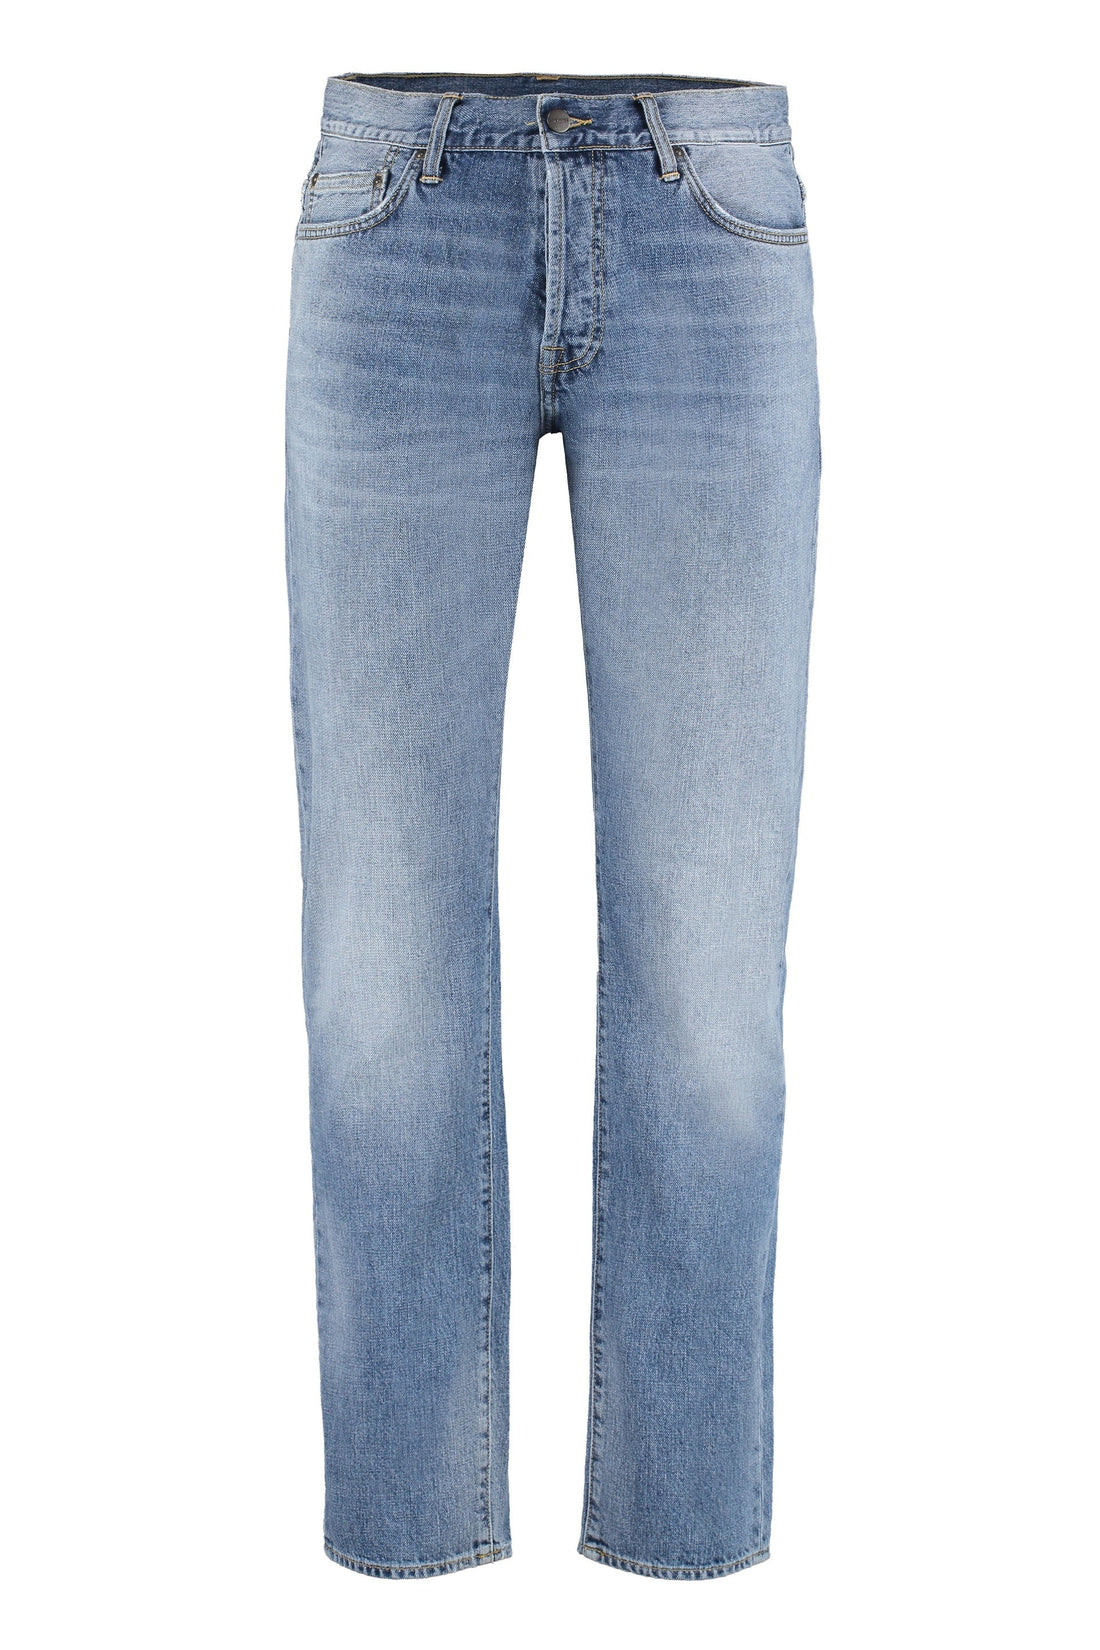 Carhartt-OUTLET-SALE-Klondike 5-pocket slim fit jeans-ARCHIVIST